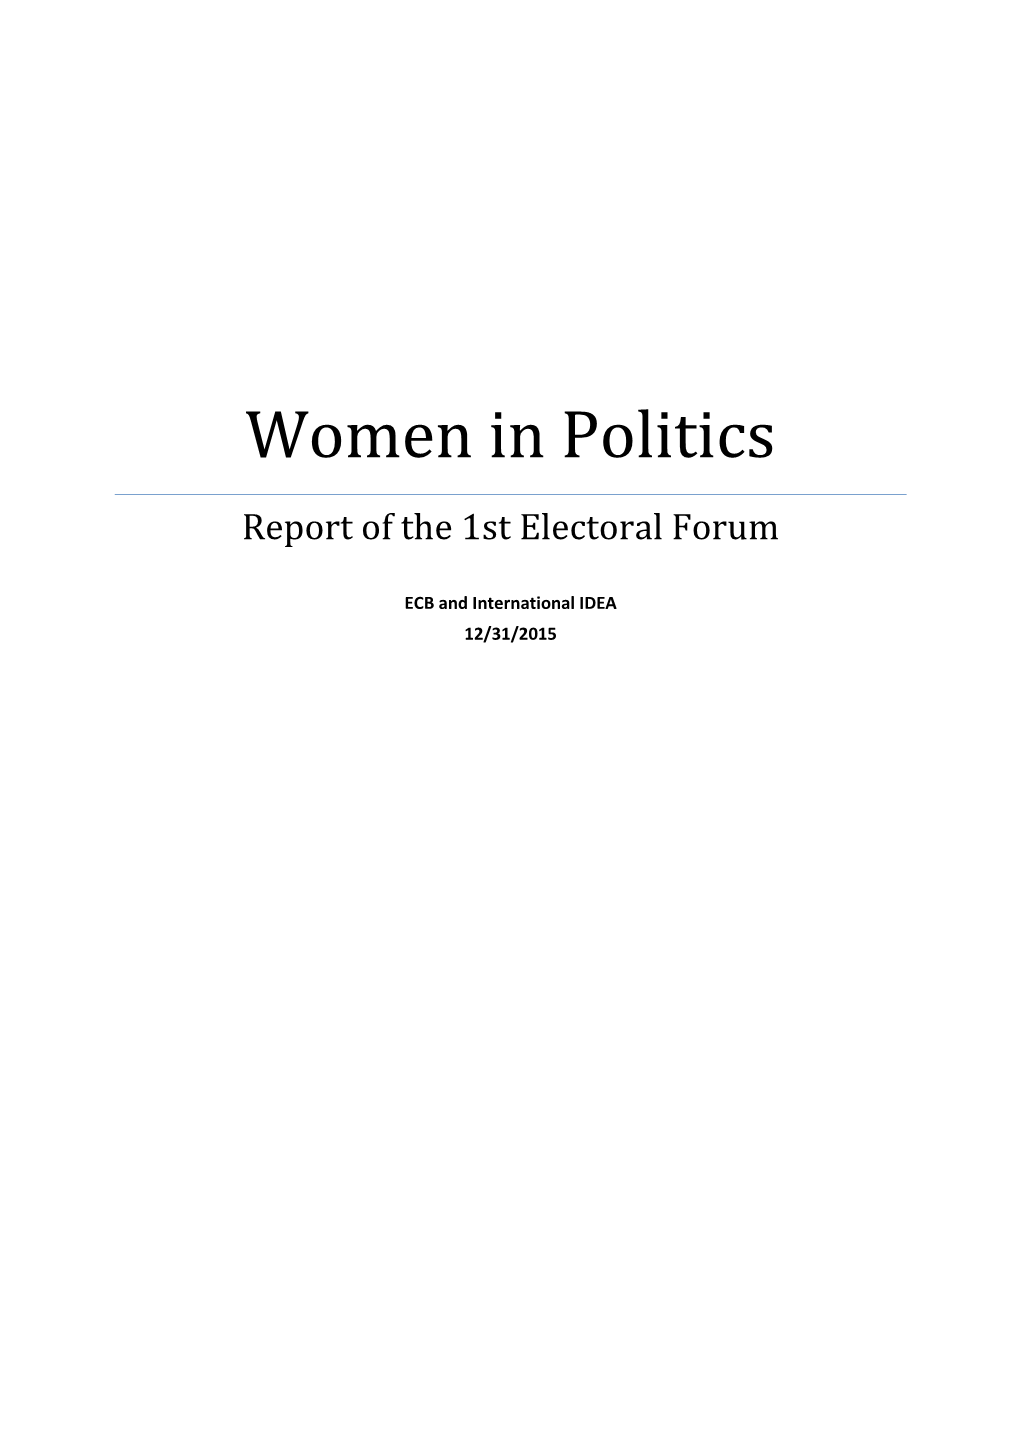 Women in Politics Report of the 1St Electoral Forum